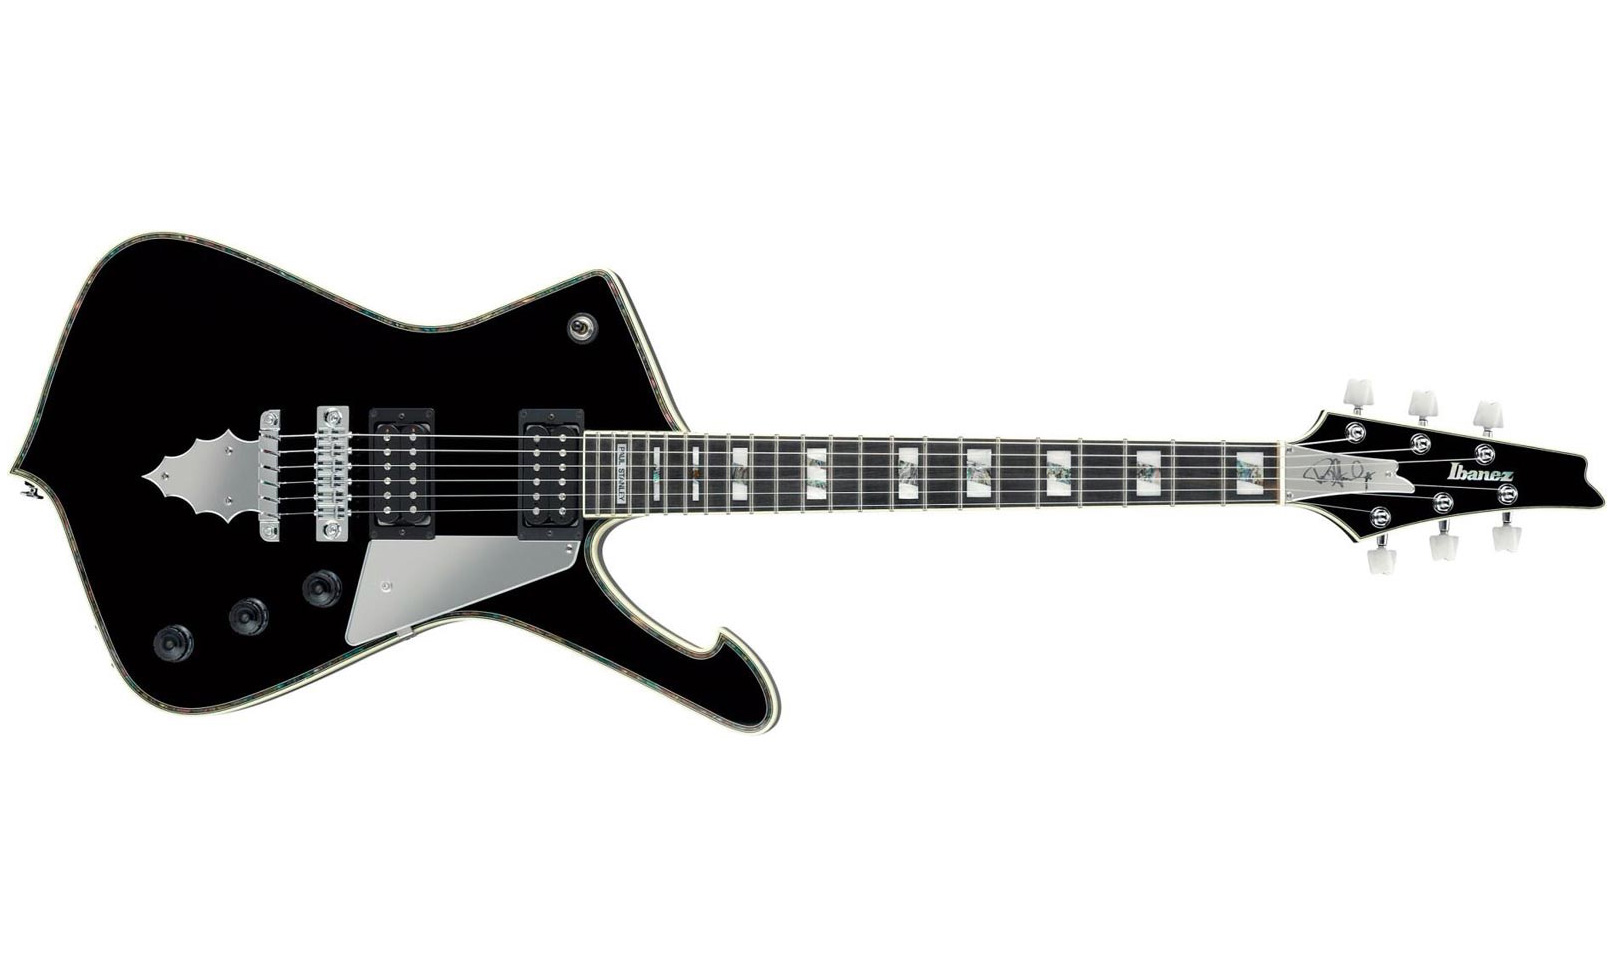 Ibanez Paul Stanley Ps10 Bk Japon Signature Hh Seymour Duncan Ht Eb - Black - Guitarra electrica metalica - Variation 1